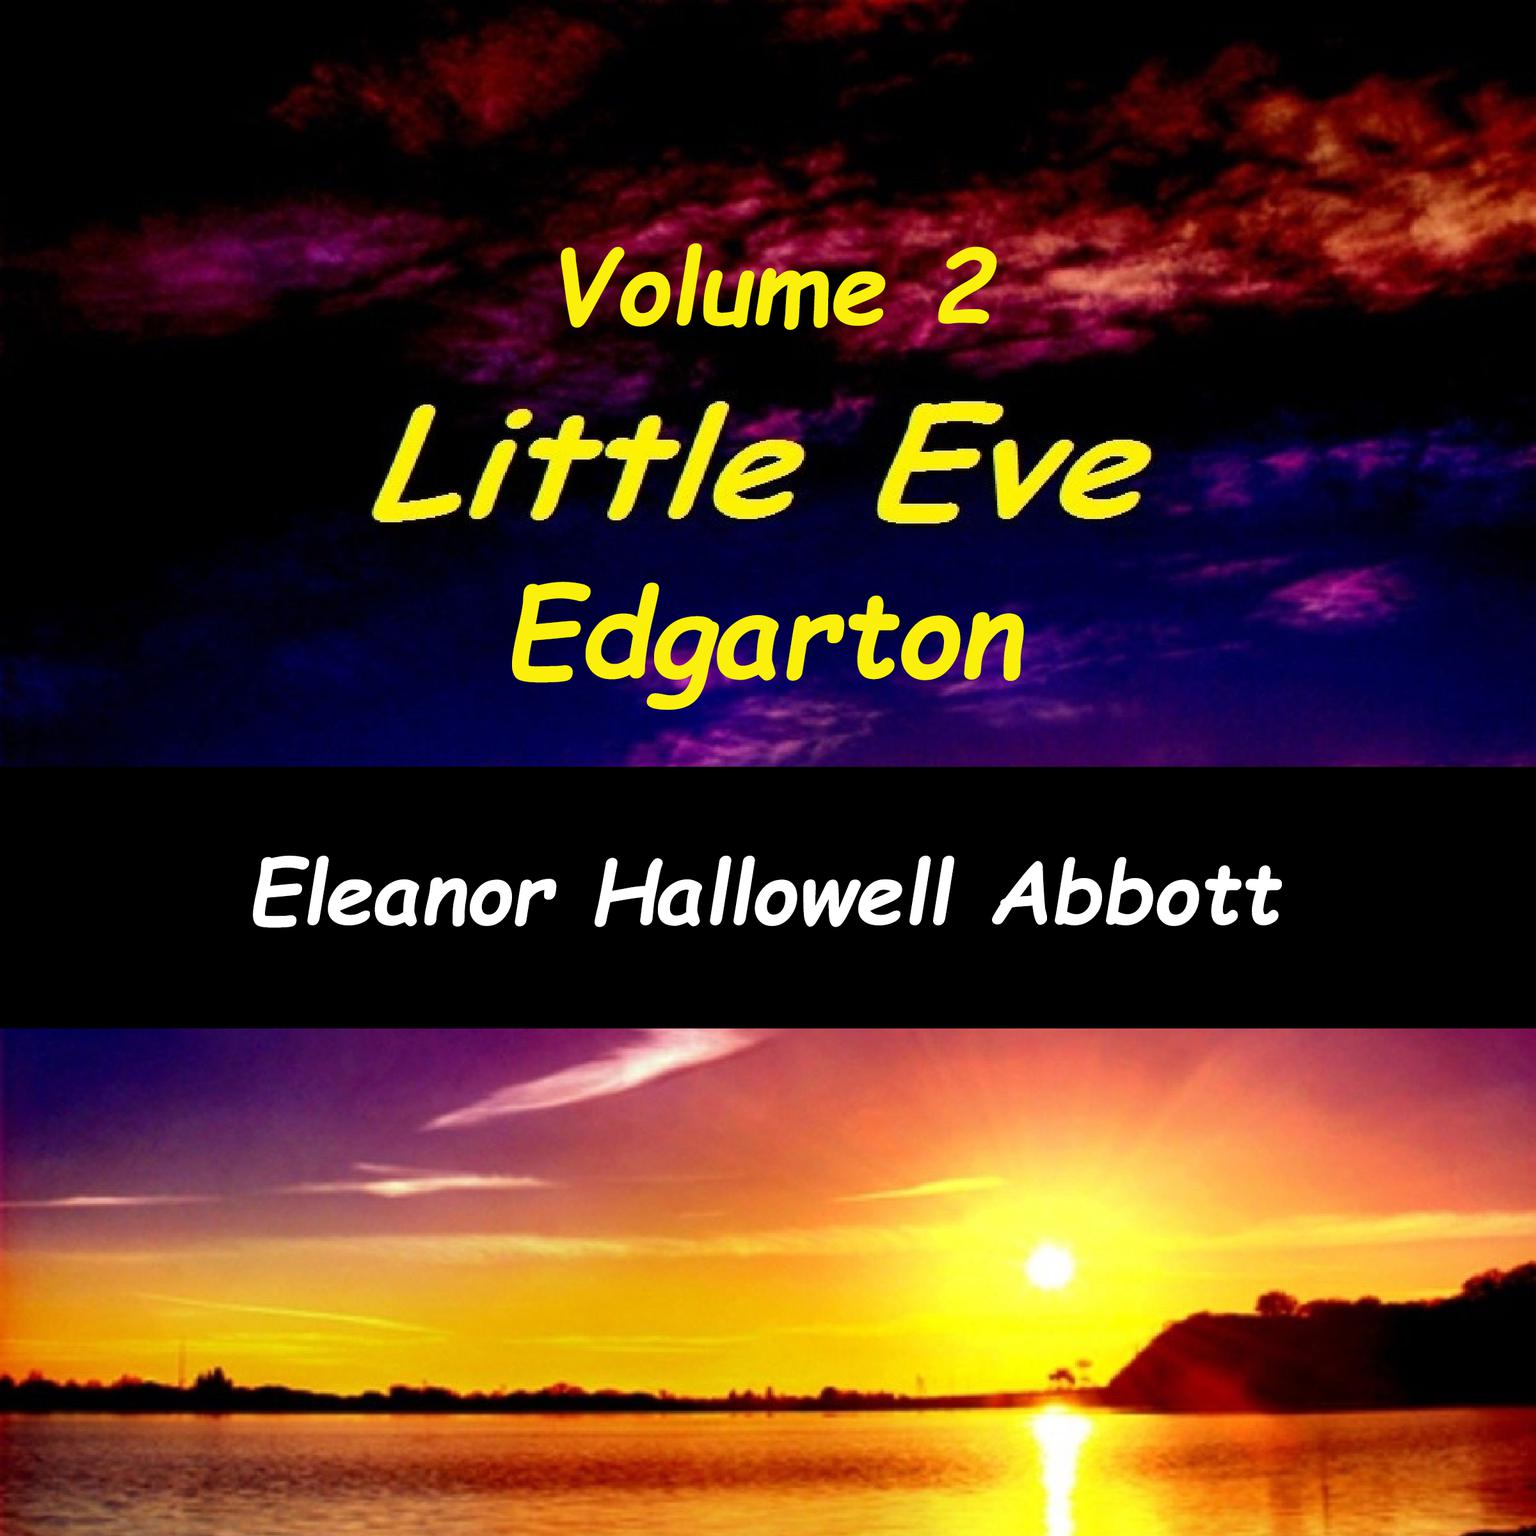 Little Eve Edgarton Volume 2 (Abridged) Audiobook, by Eleanor Hallowell Abbott